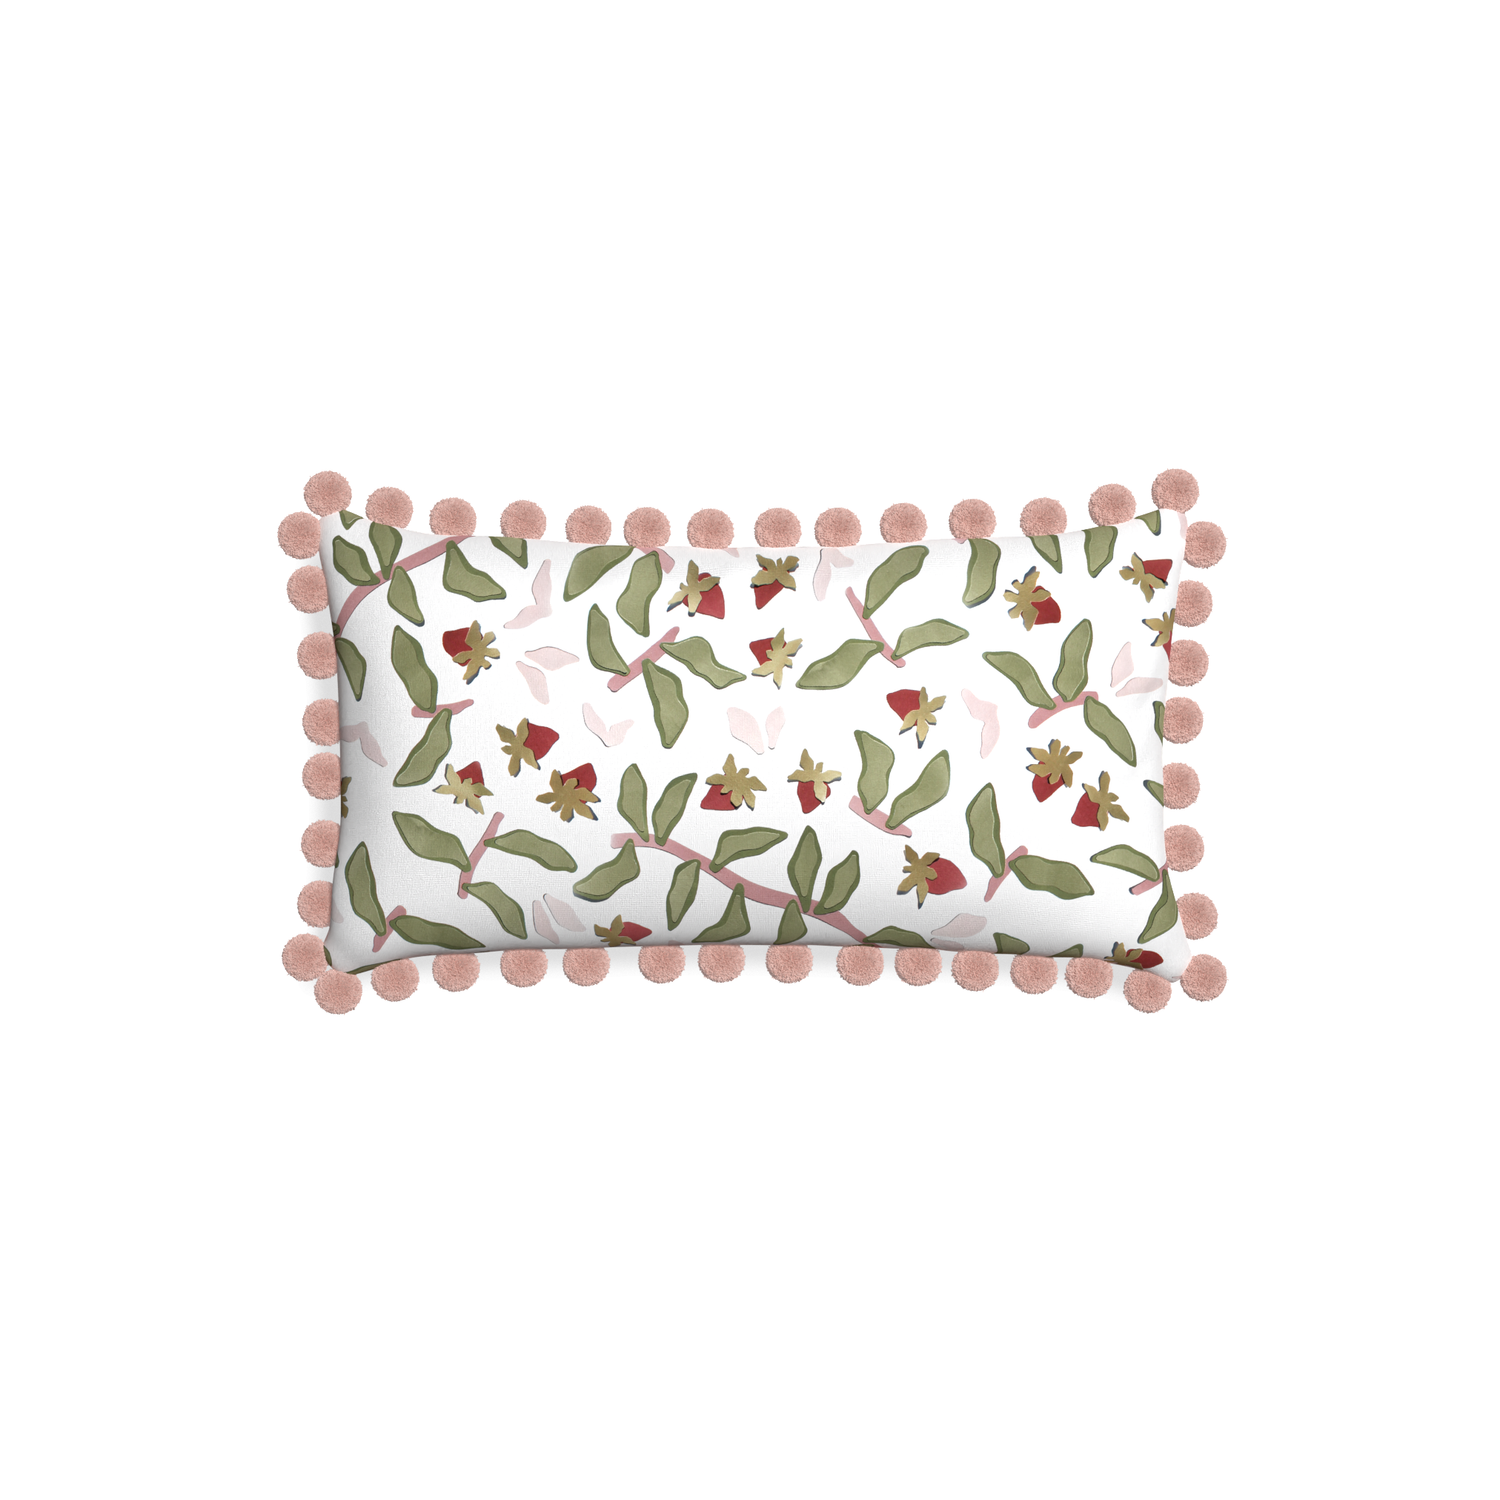 Petite-lumbar nellie custom strawberry & botanicalpillow with rose pom pom on white background